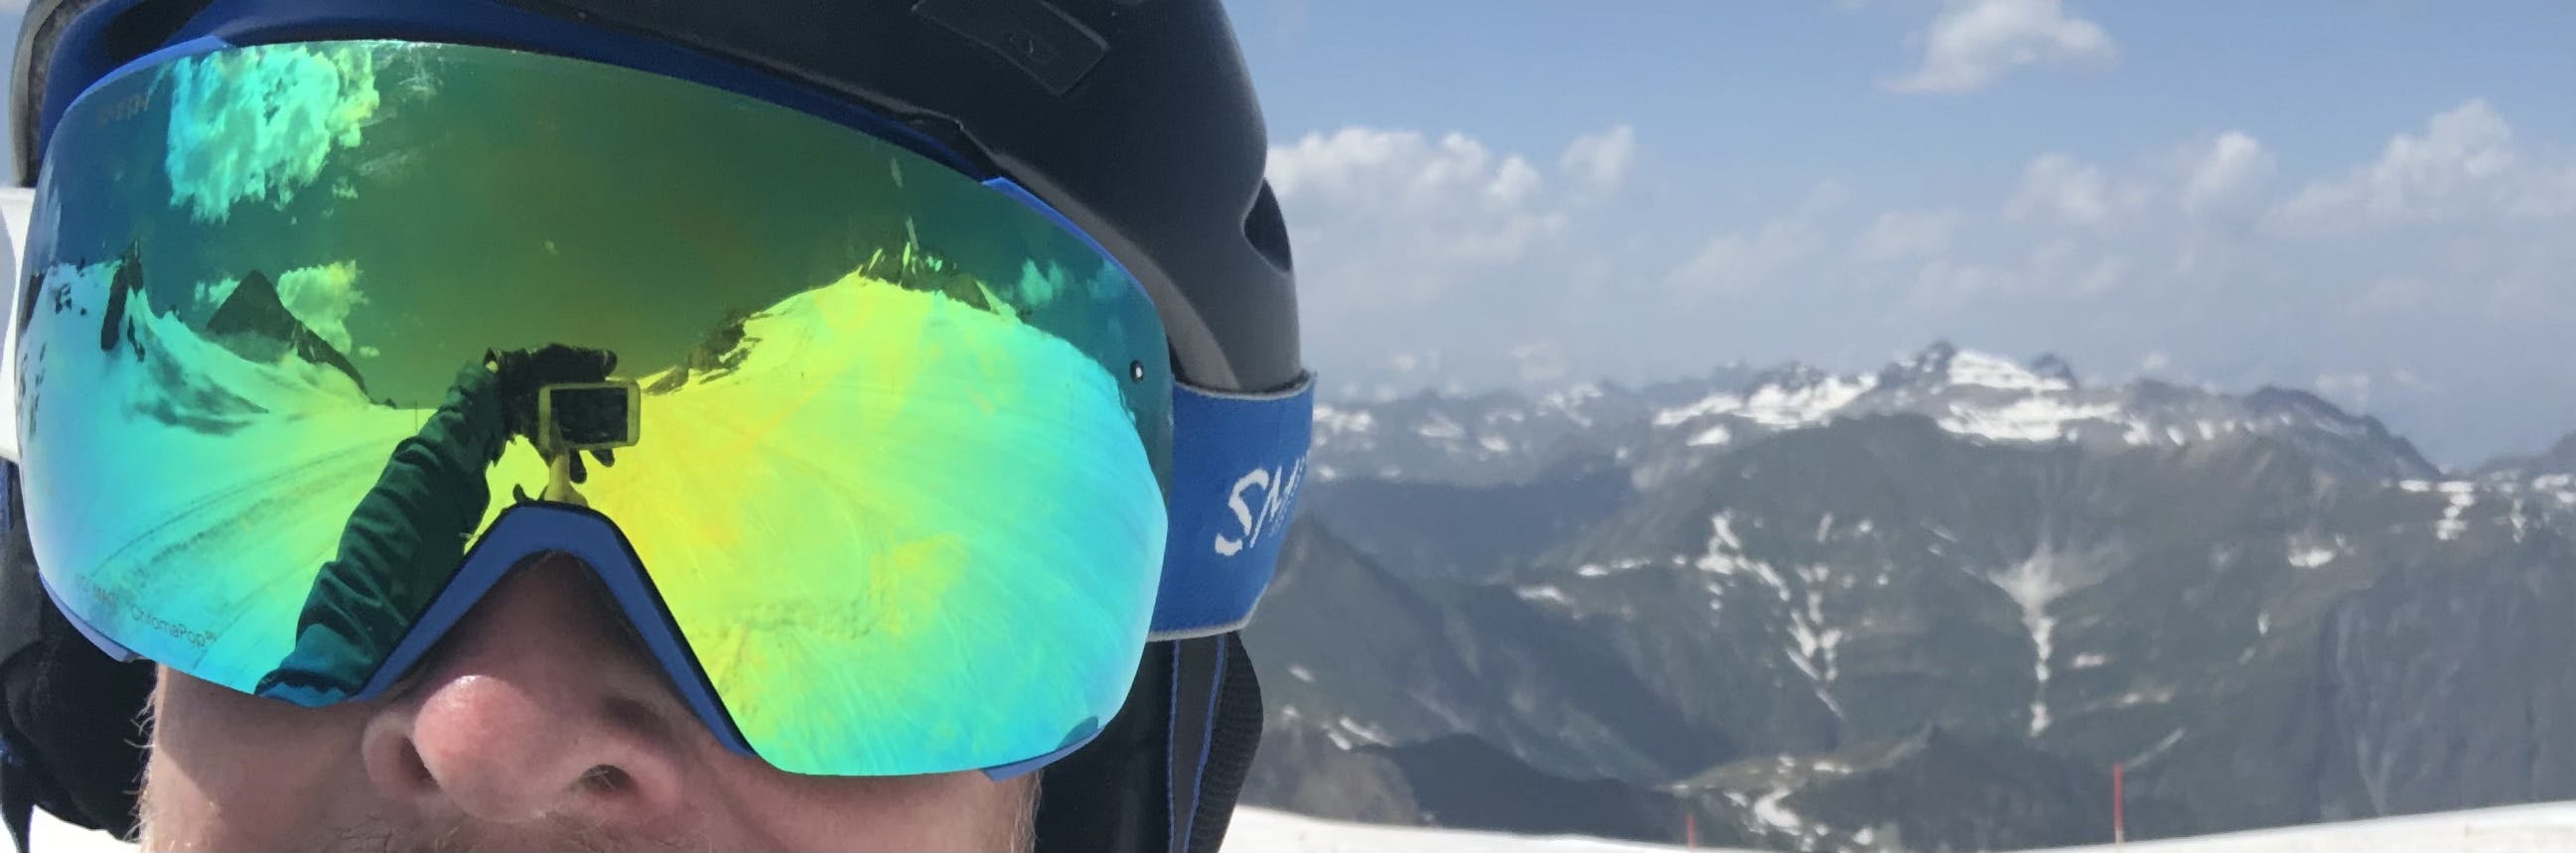 Oakley PRIZM Snow Lens Testing Day at Snow Summit